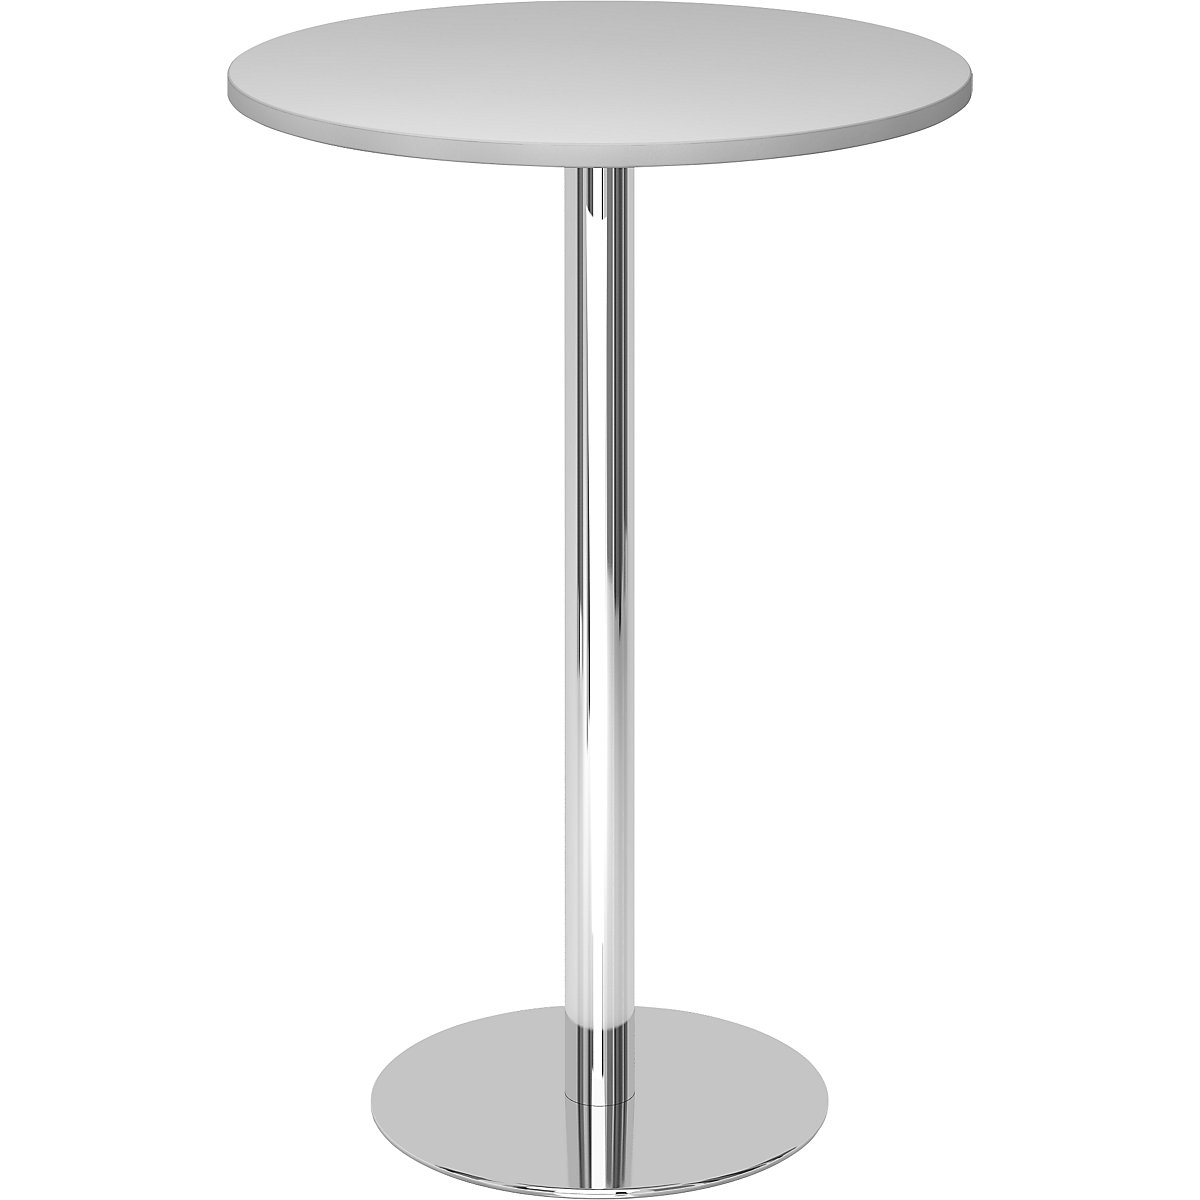 Pedestal table, Ø 800 mm, 1116 mm high, chrome plated frame, tabletop in light grey-5